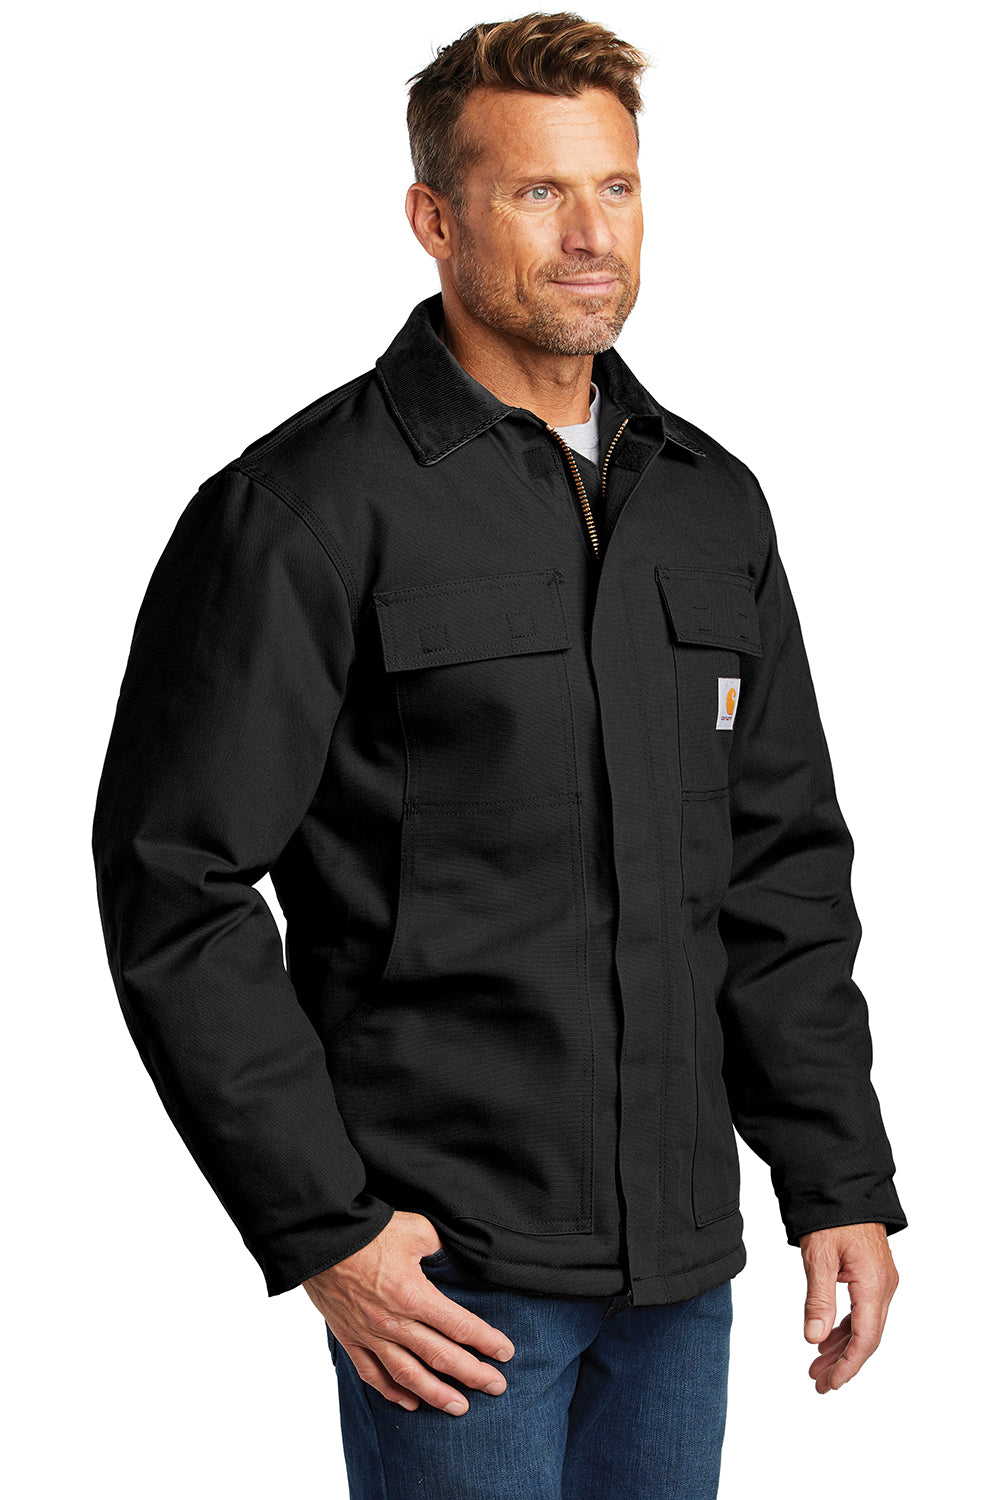 Carhartt CTC003/CTTC003 Mens Wind & Water Resistant Duck Cloth Full Zip Jacket Black Model 3Q